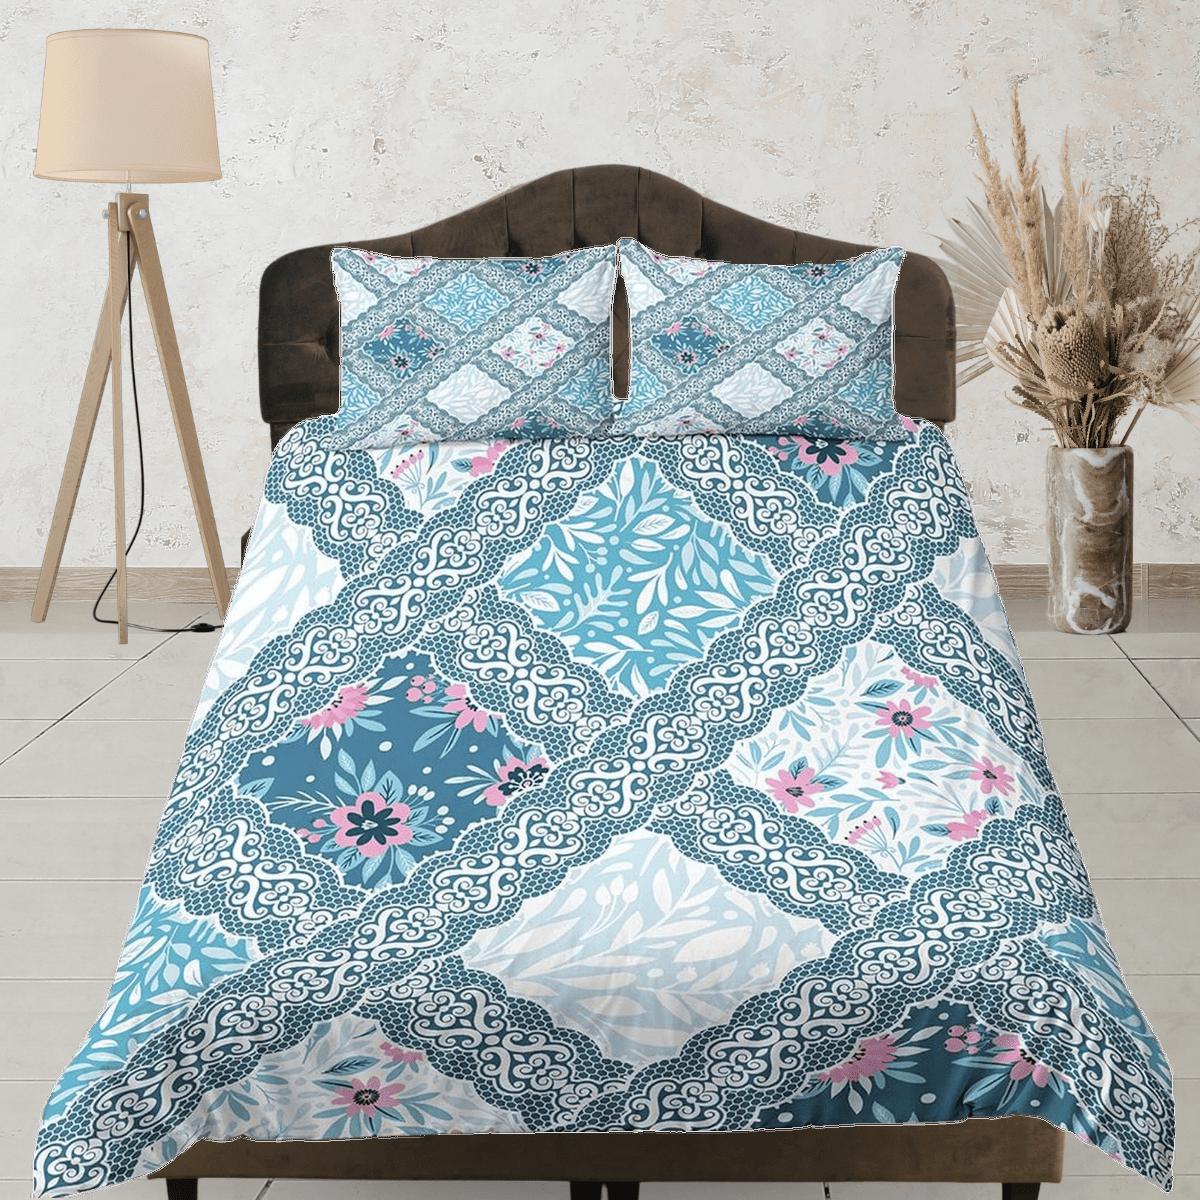 daintyduvet Whimsical blue patchwork quilt printed duvet cover set, aesthetic room decor bedding set full, king, queen size, boho bedspread shabby chic